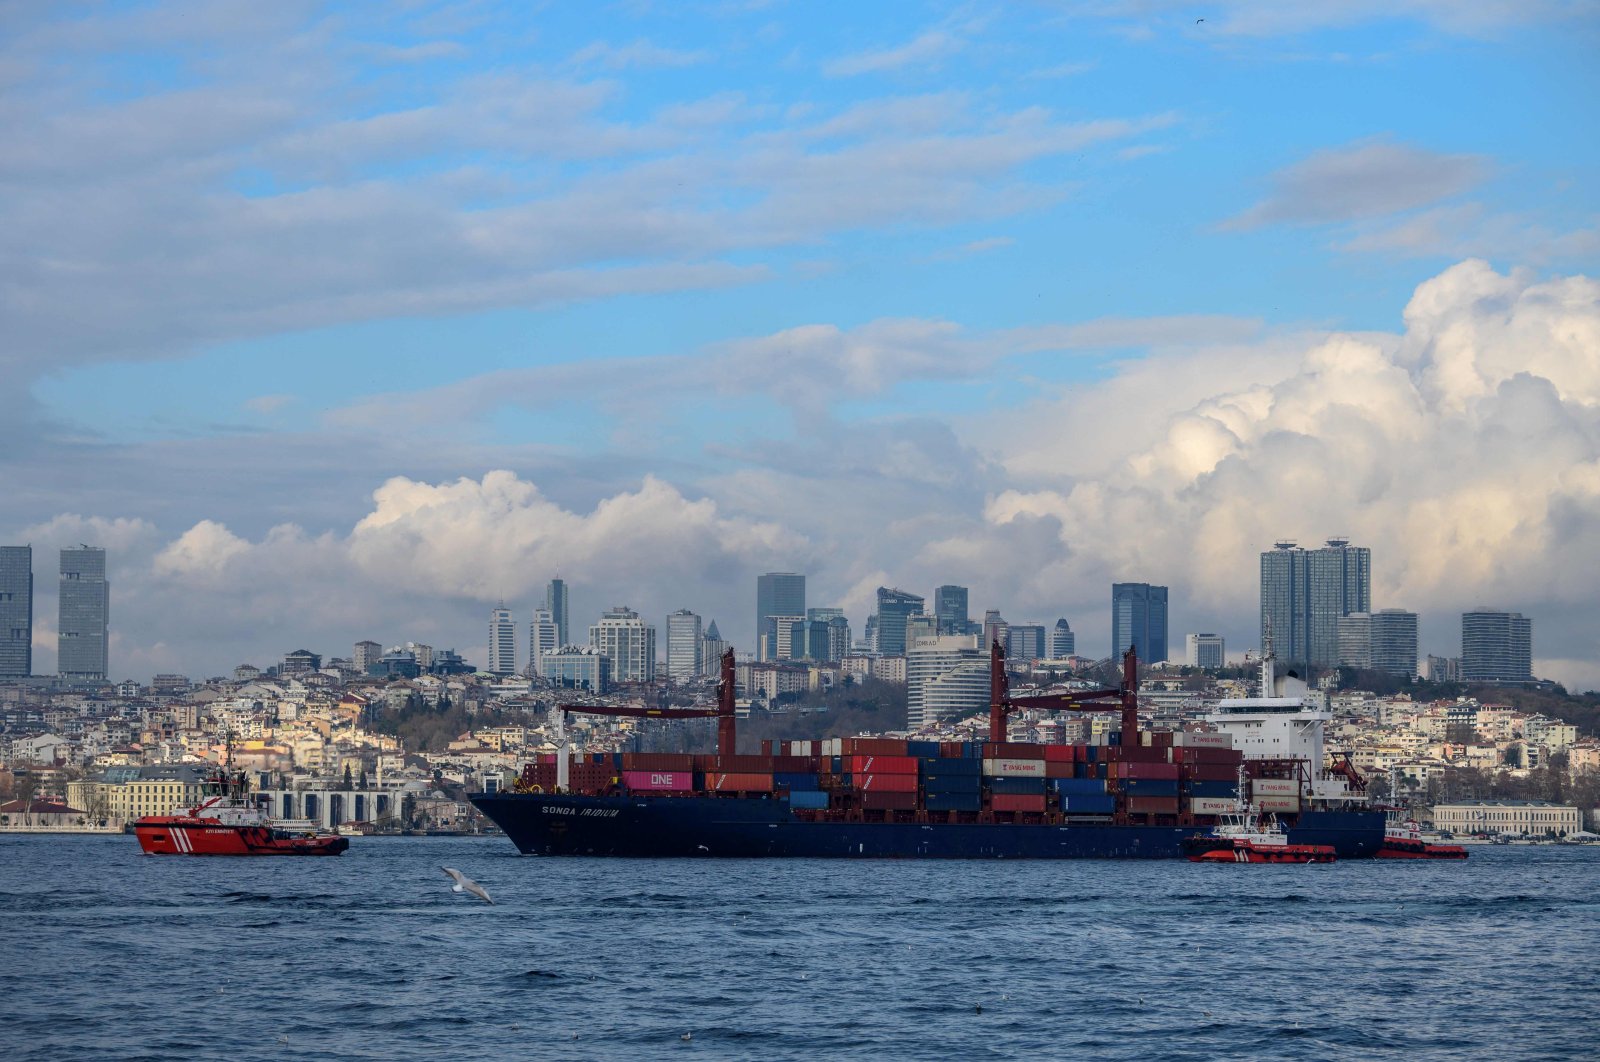 A cargo vessel is seen in Istanbul, Turkey, Dec. 27, 2019. (AFP Photo)